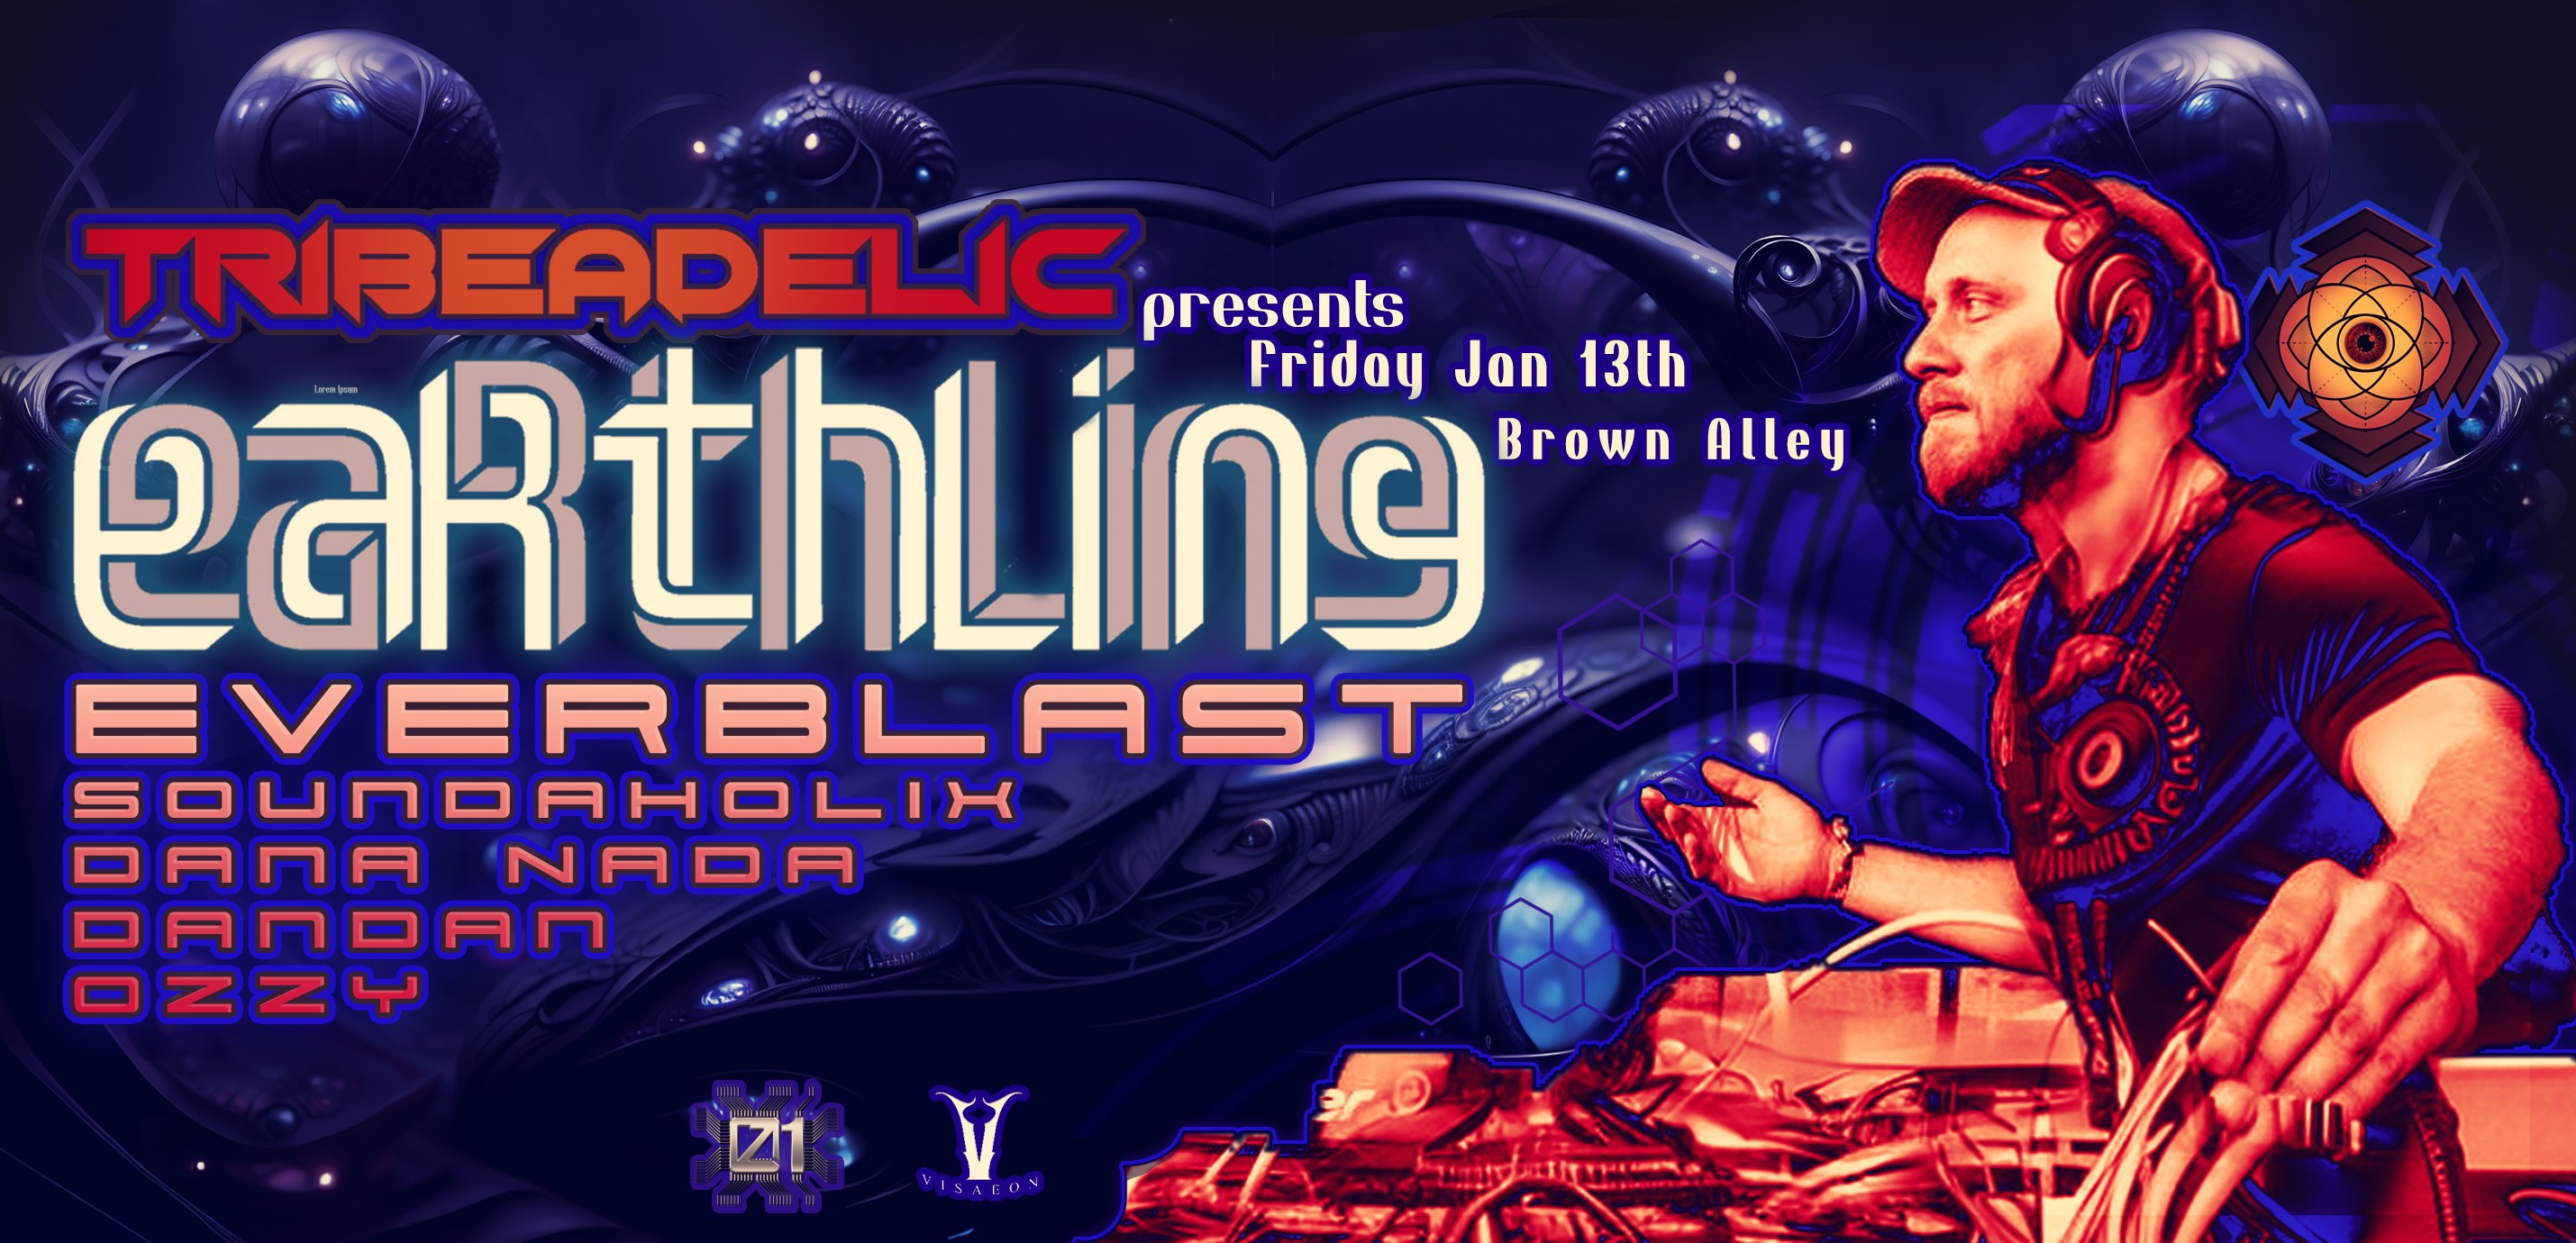 Tribeadelic presents EARTHLING & EVERBLAST!